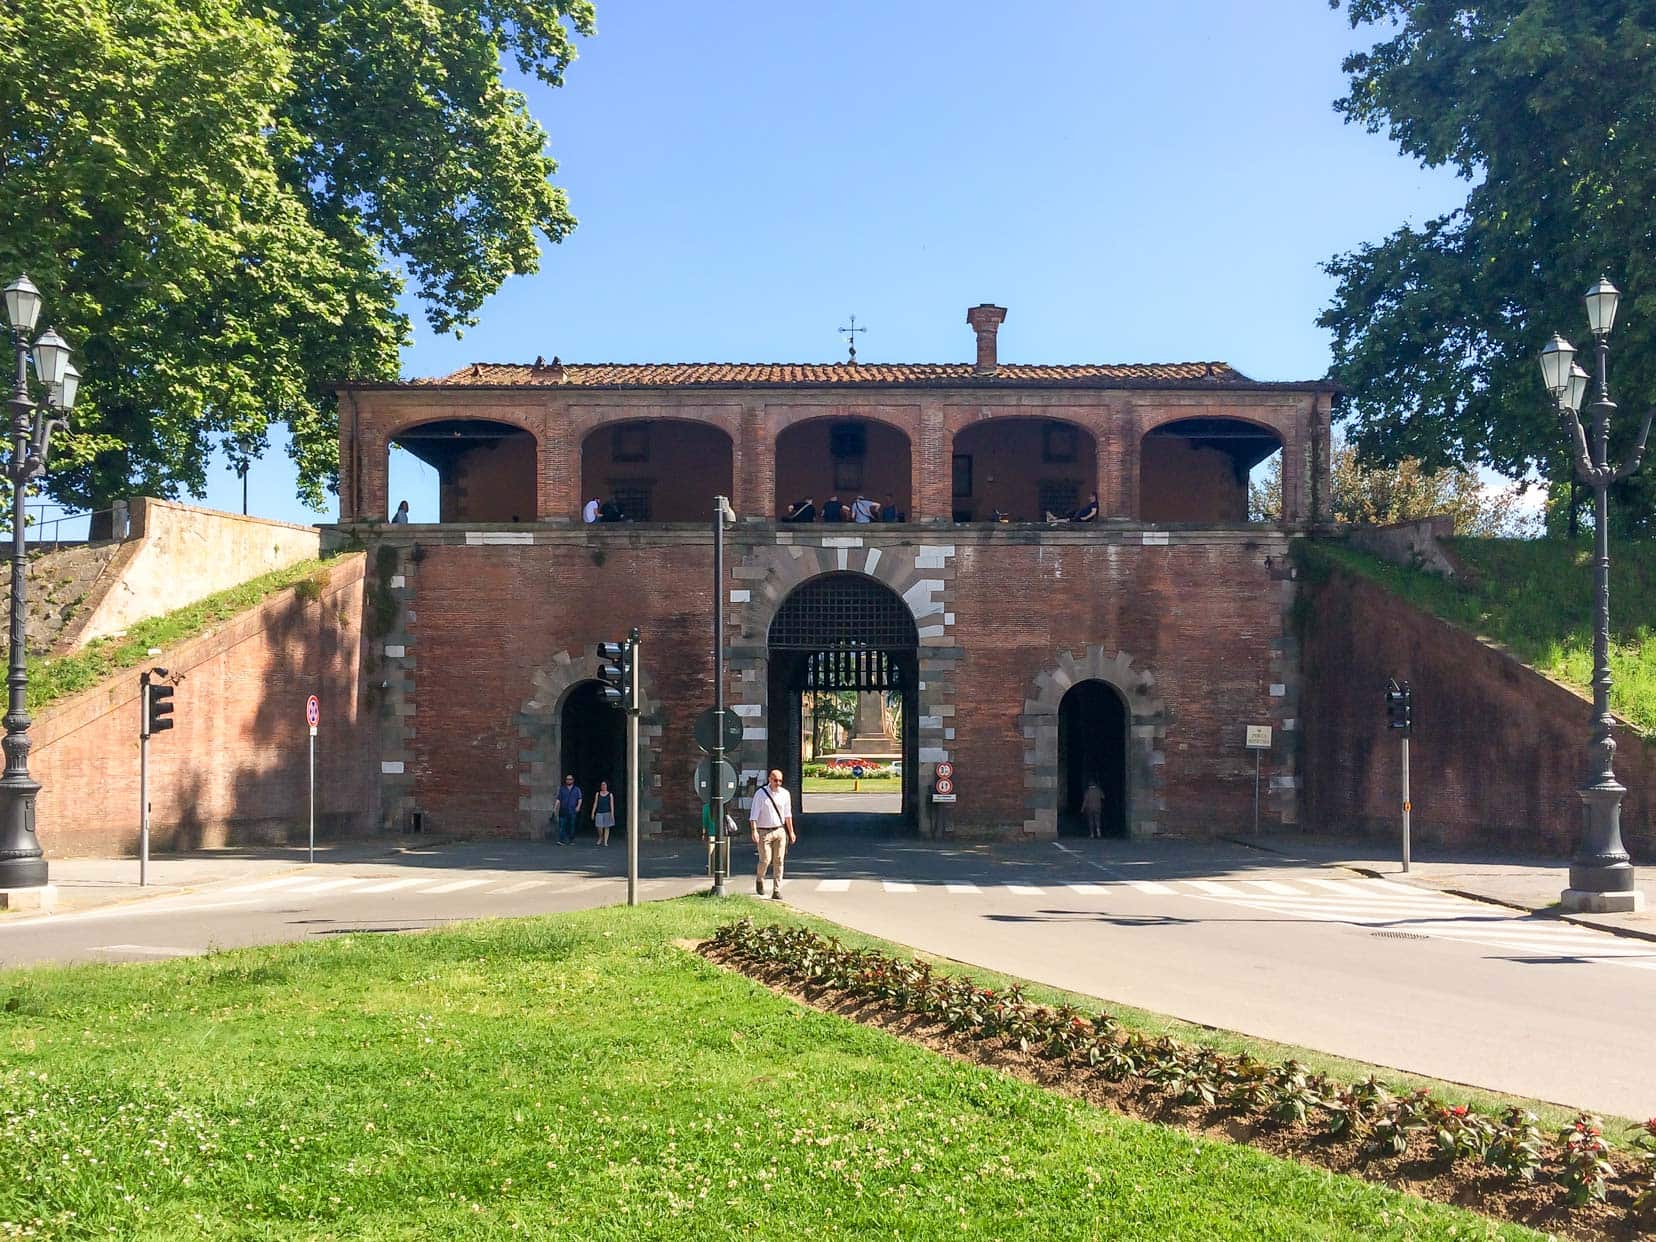 entry-to-the-walled-town-of-Lucca through Porta San Pietro gateway